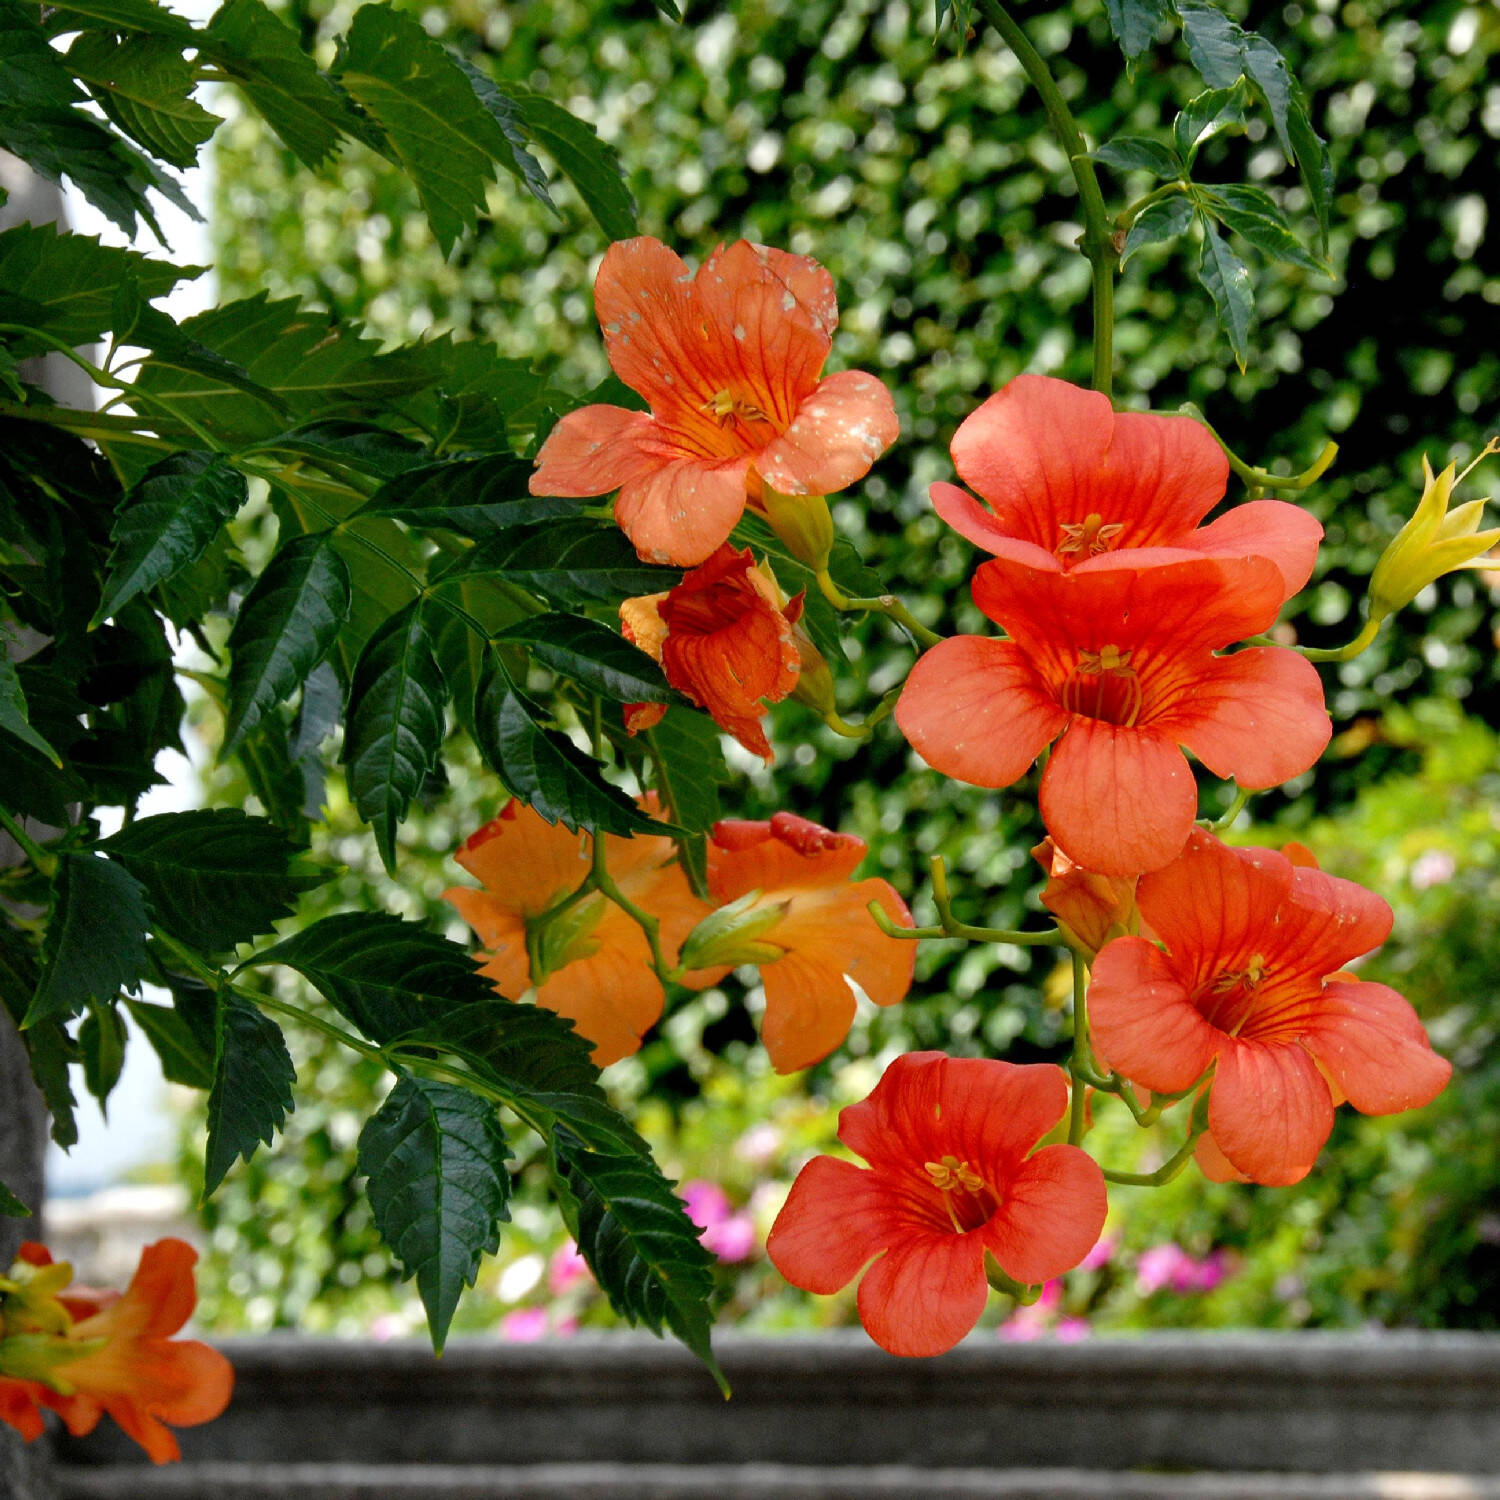  Chinesische Klettertrompete - Trompetenblume - Campsis grandiflora